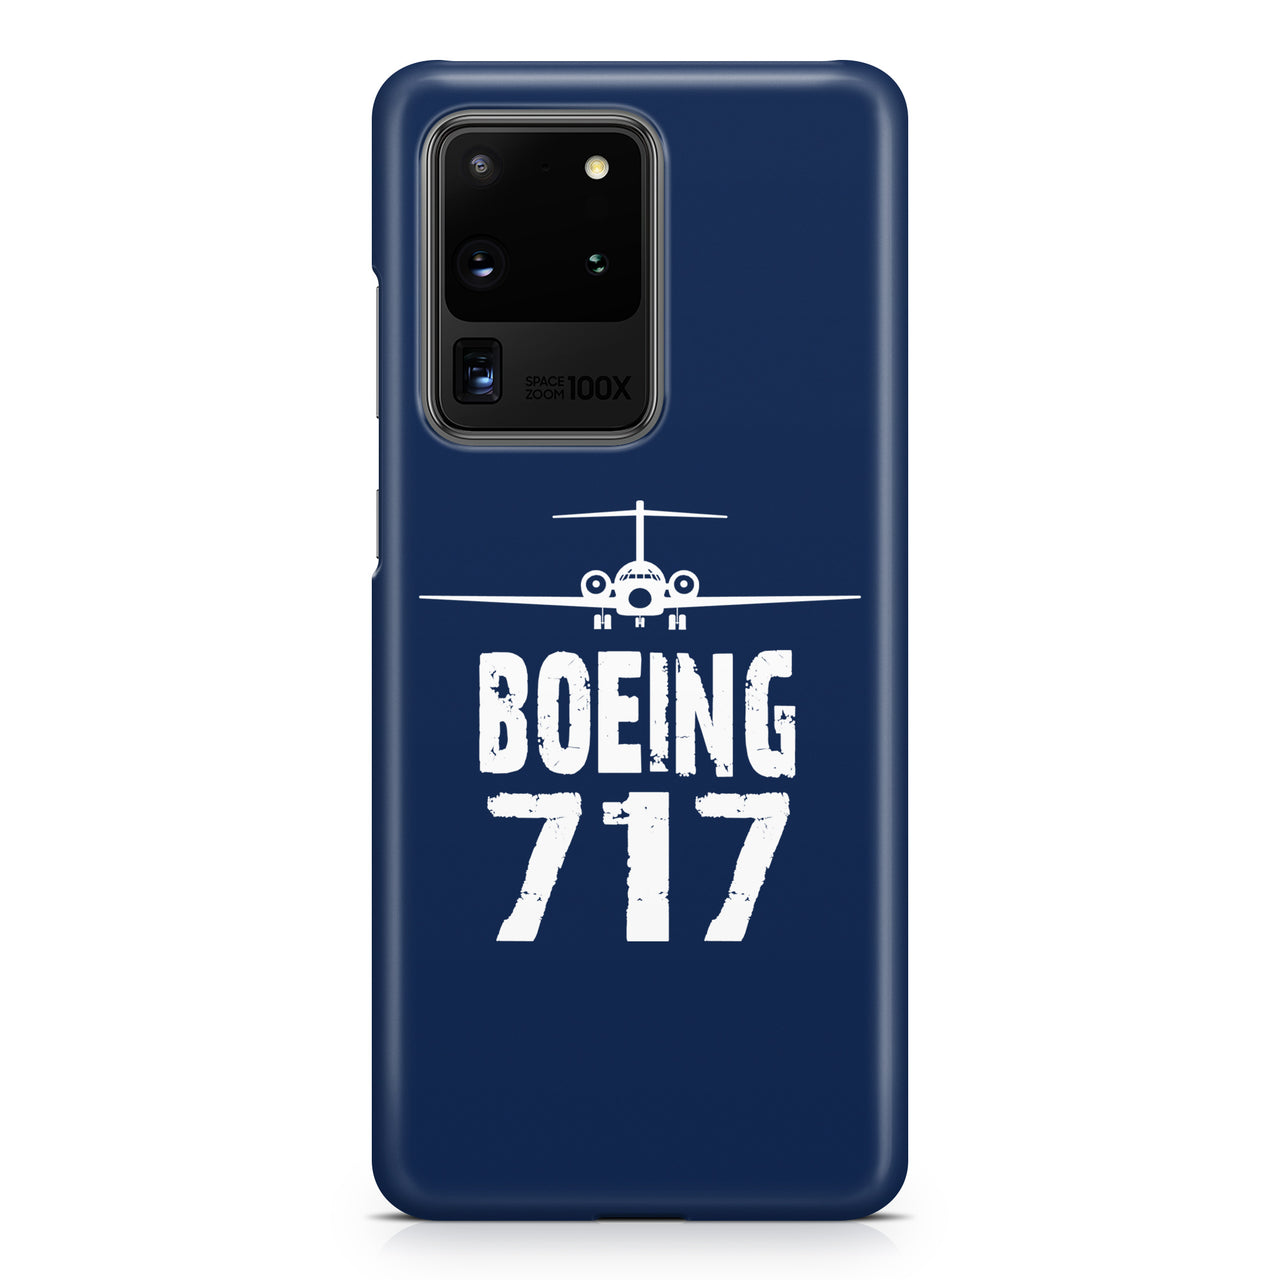 Boeing 717 & Plane Samsung A Cases